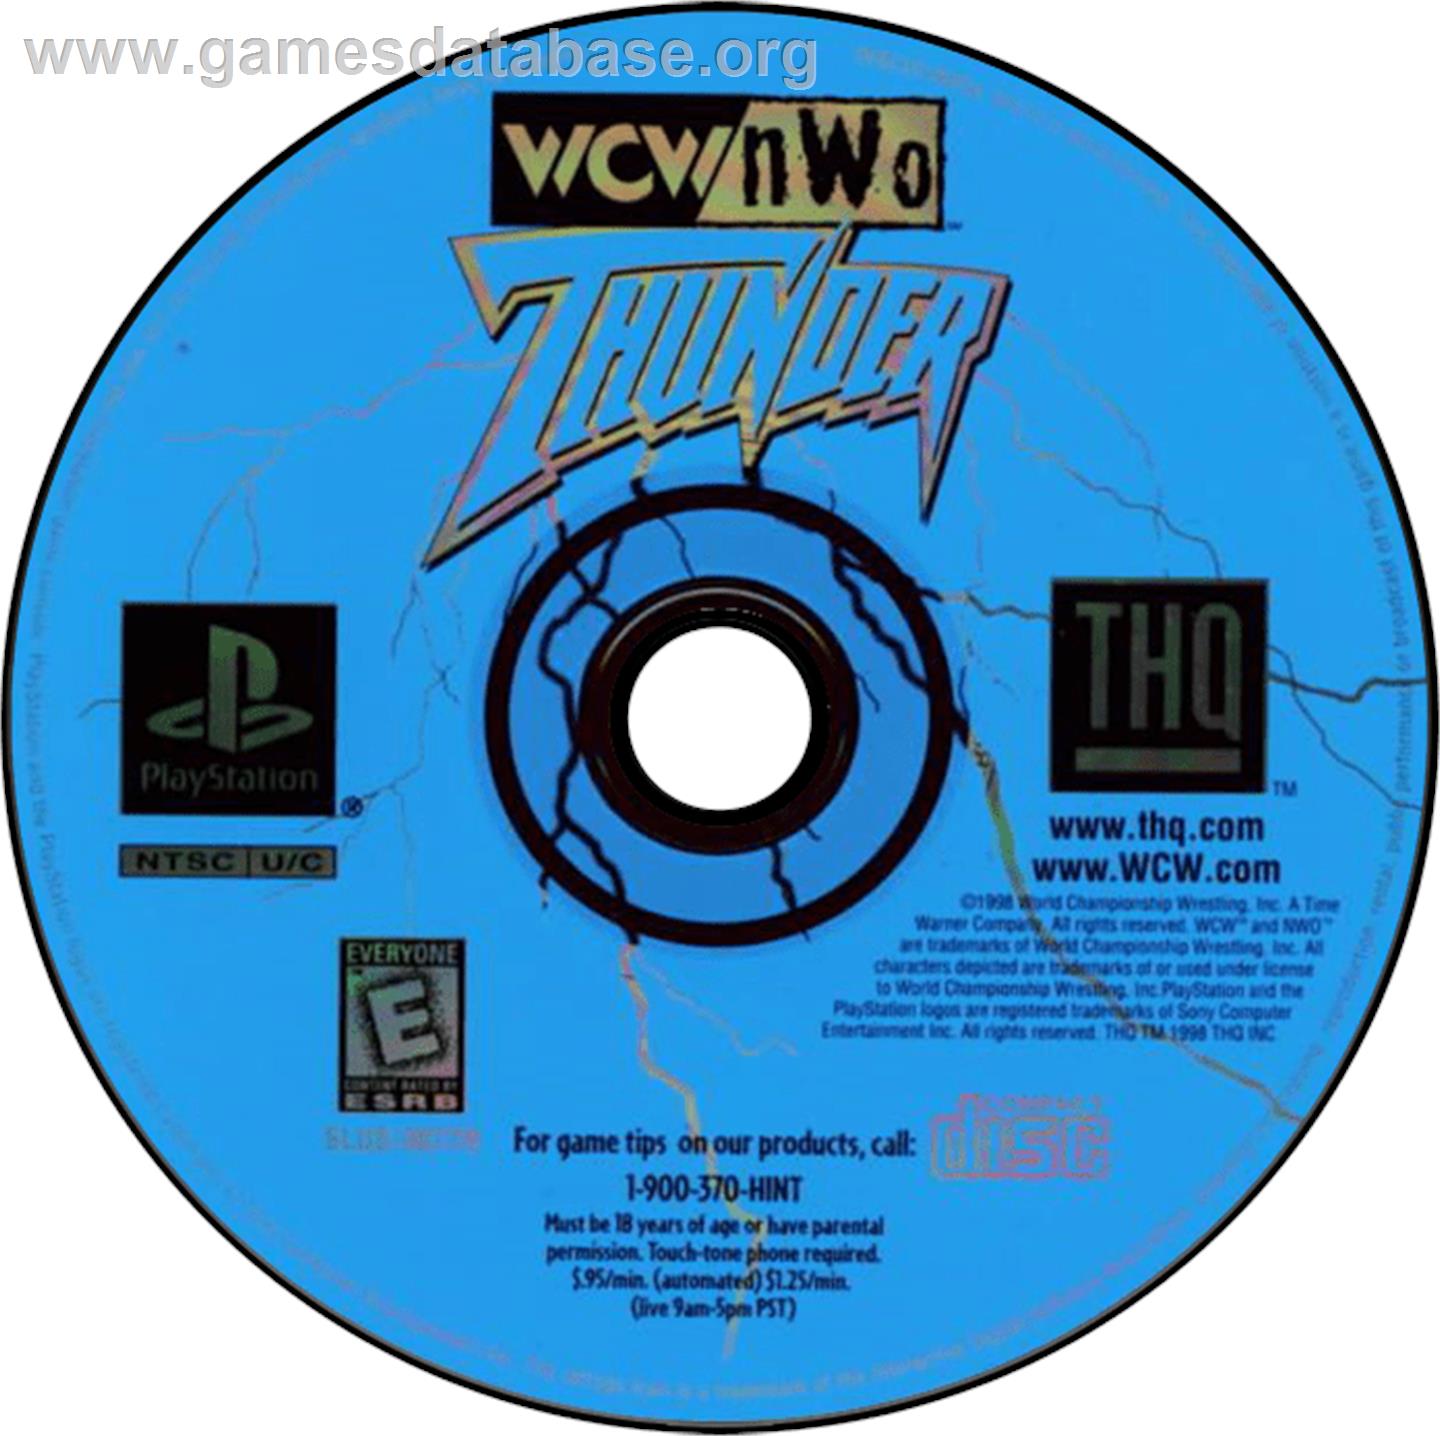 WCW/NWO Thunder - Sony Playstation - Artwork - Disc